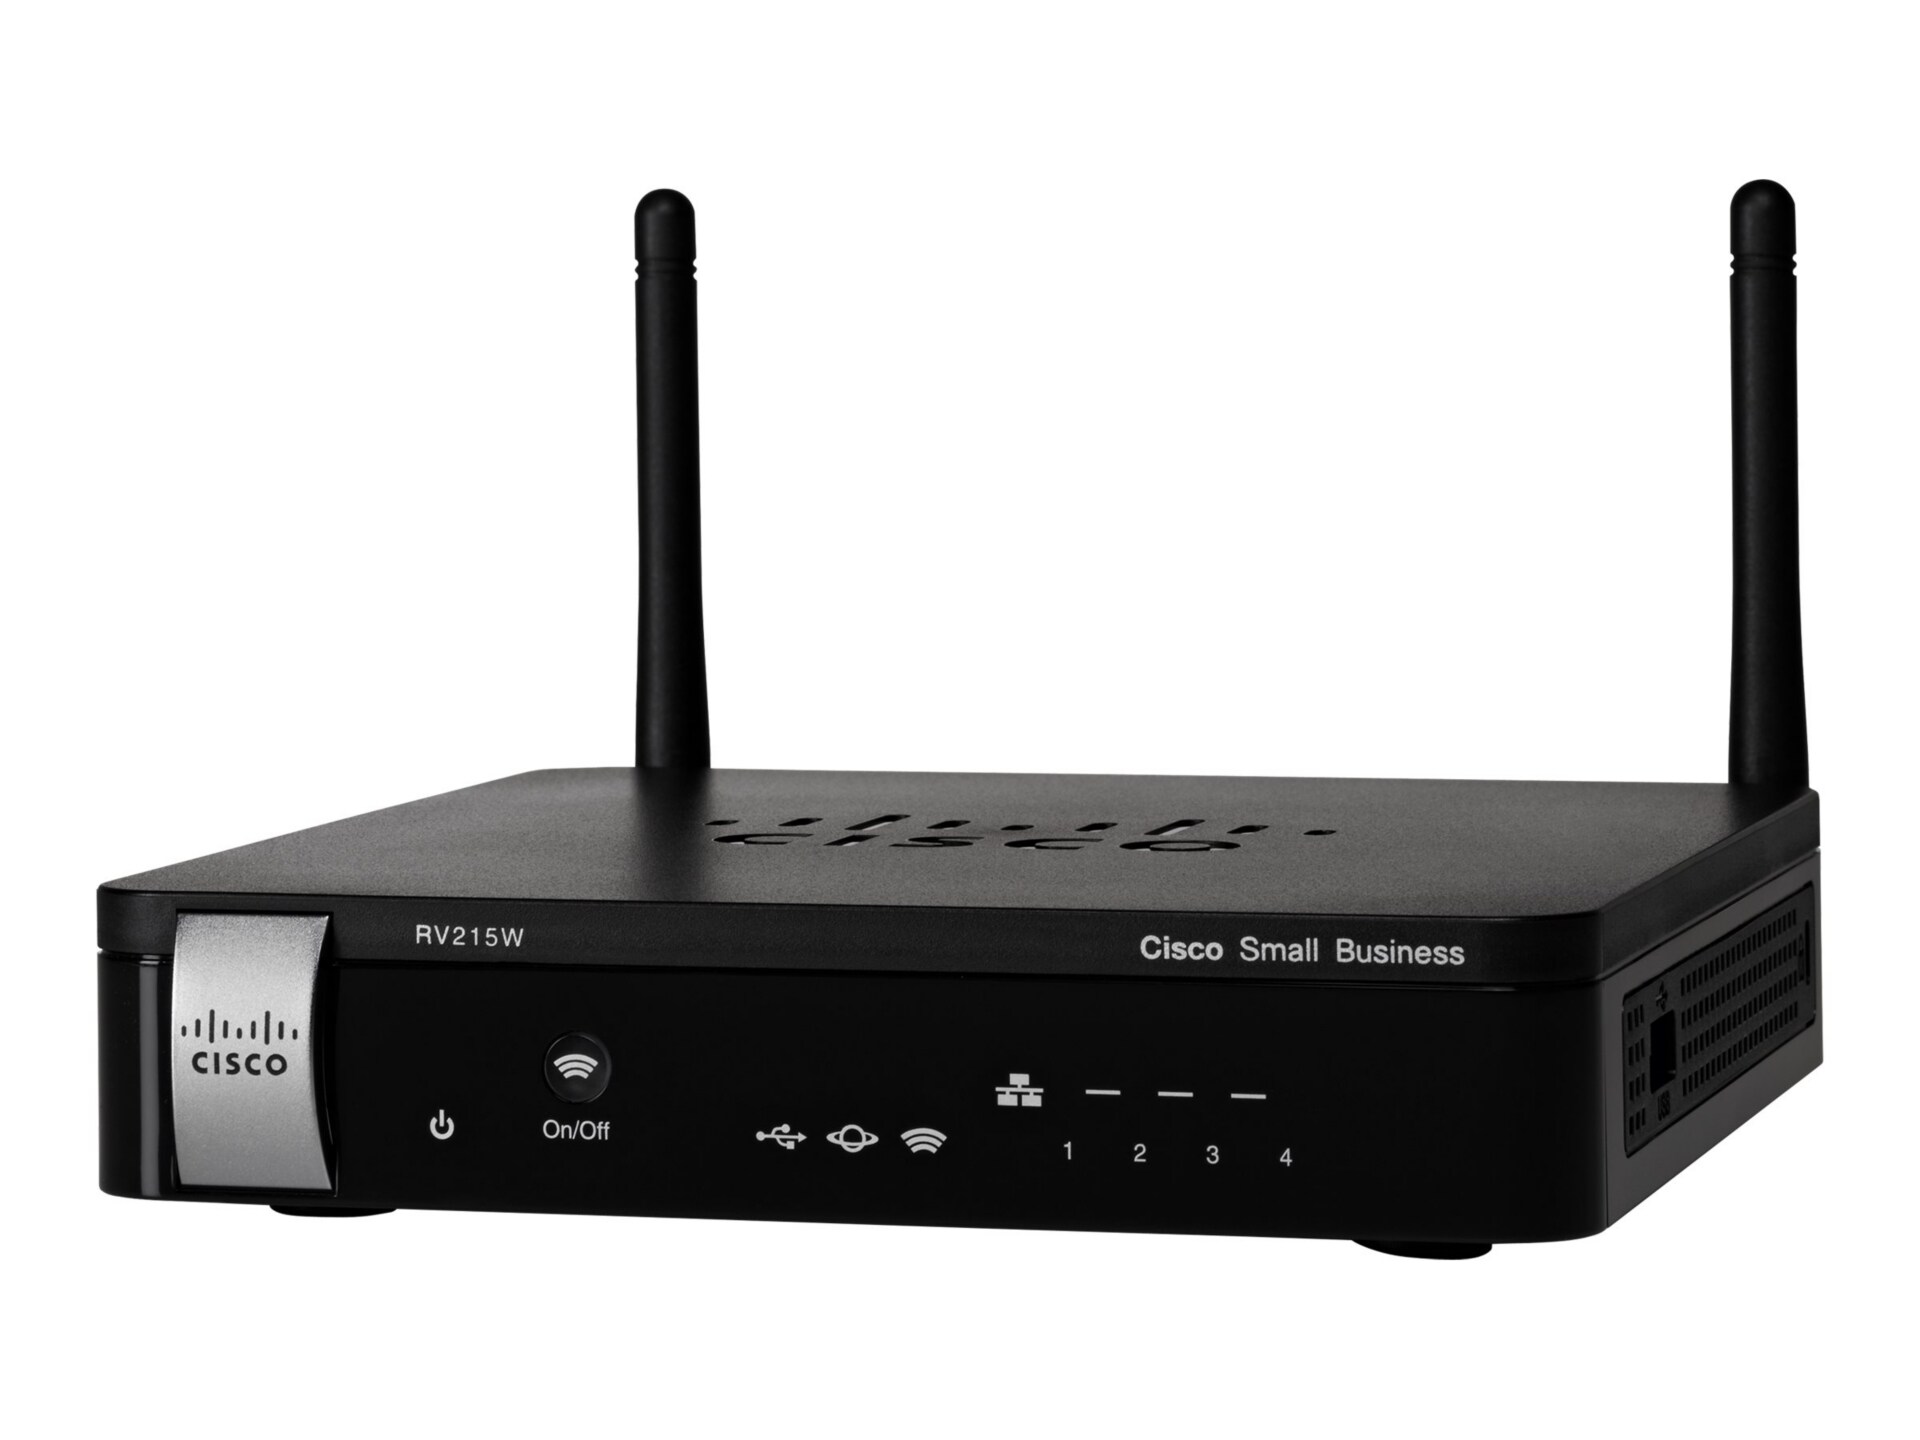 Cisco RV215W Wireless Router